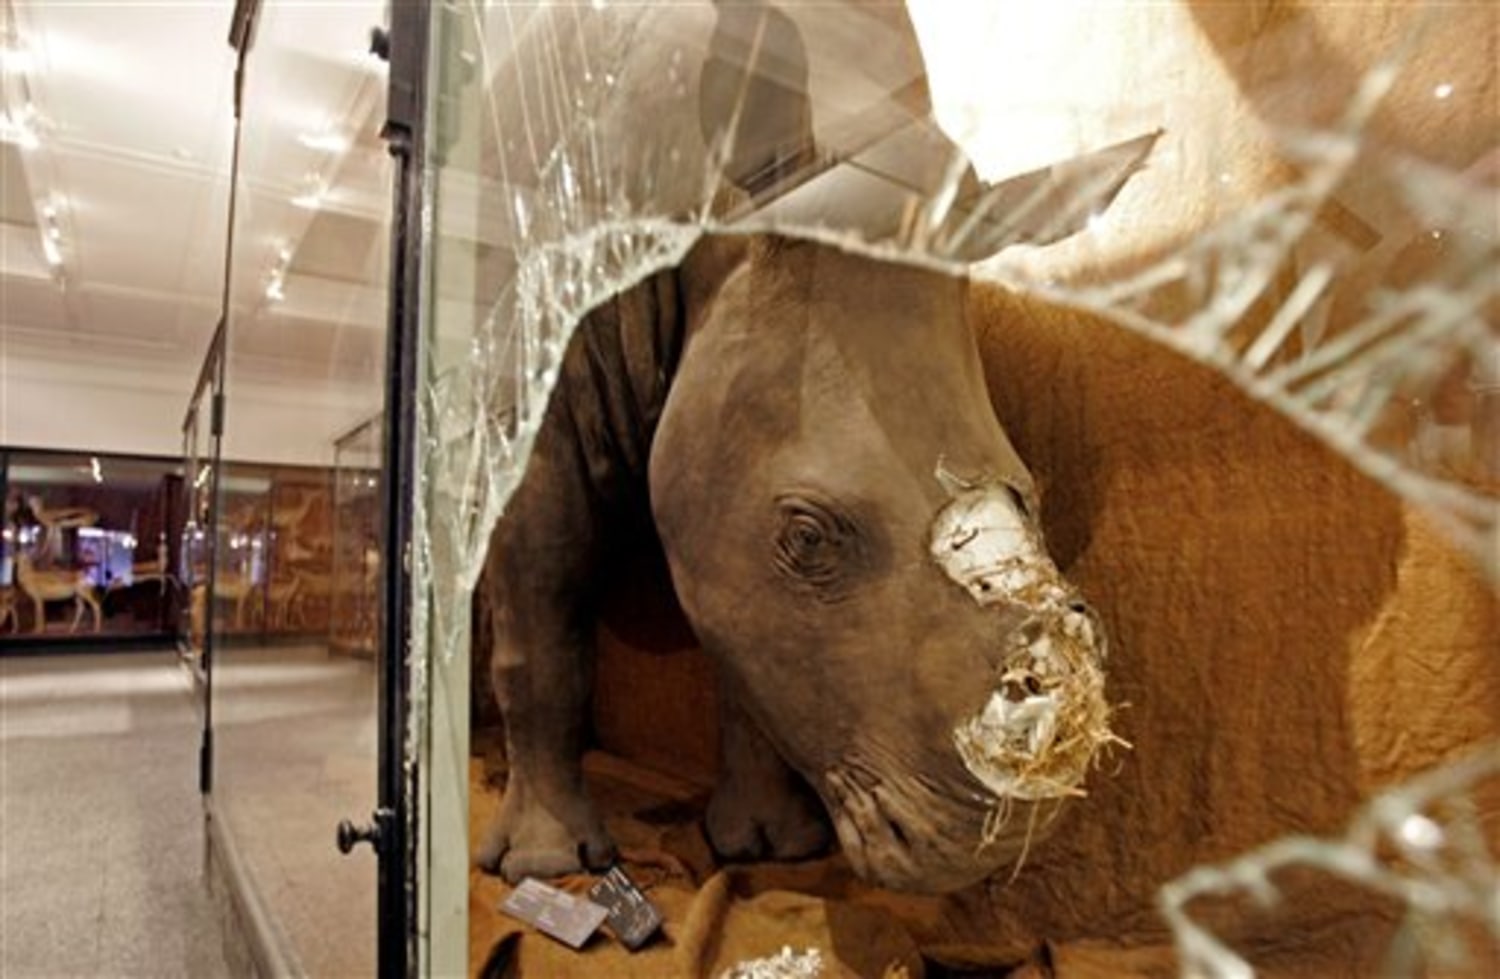 Stuffed rhino is back on view — minus horn